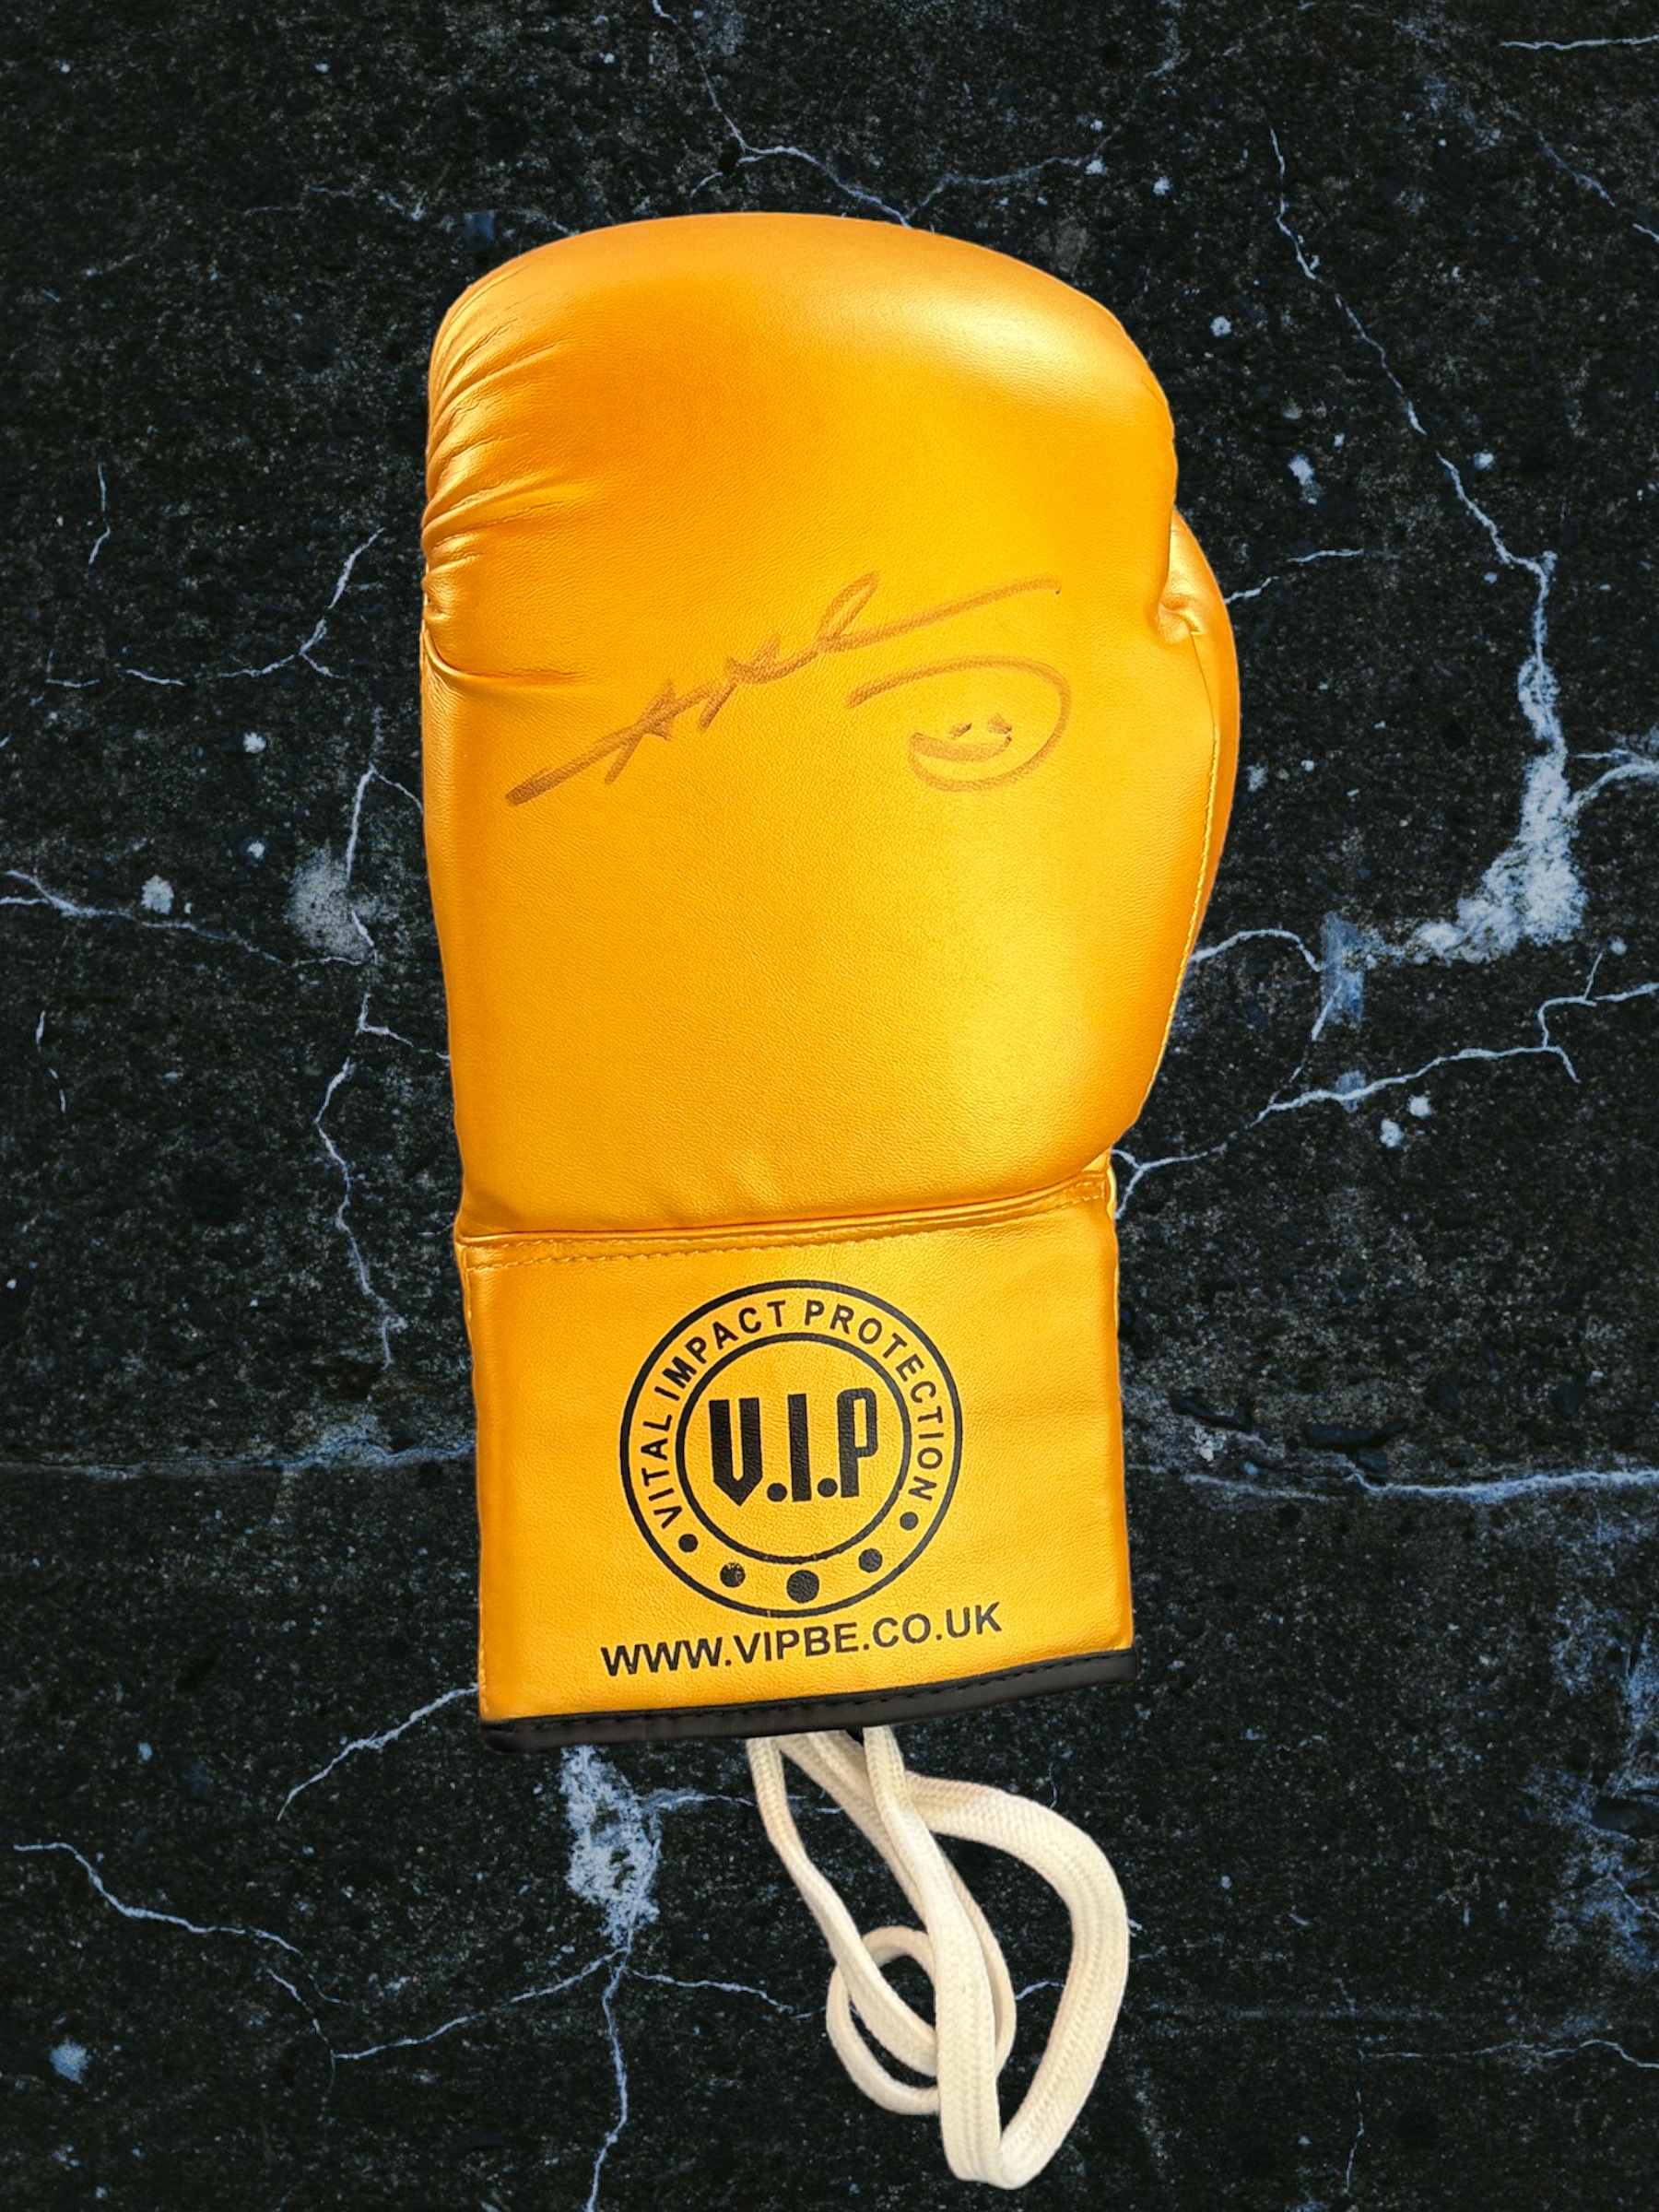 Sugar Ray Leonard signed gold VIP boxing glove. Ray Charles Leonard (born May 17, 1956), best